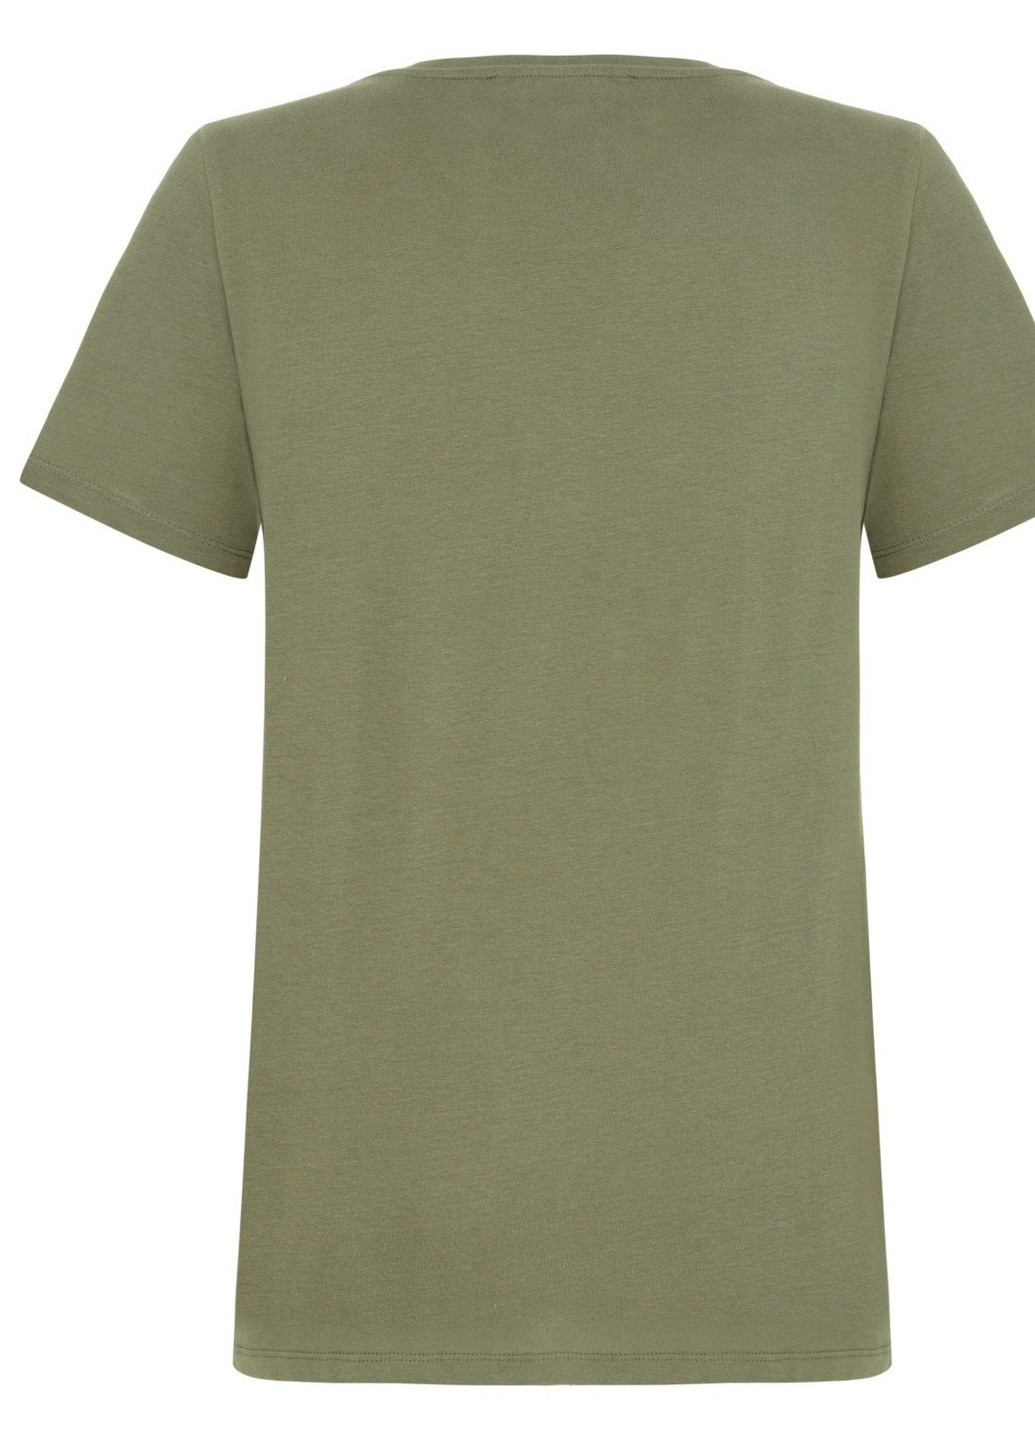 Хаки (оливковая) летняя футболка Mudo